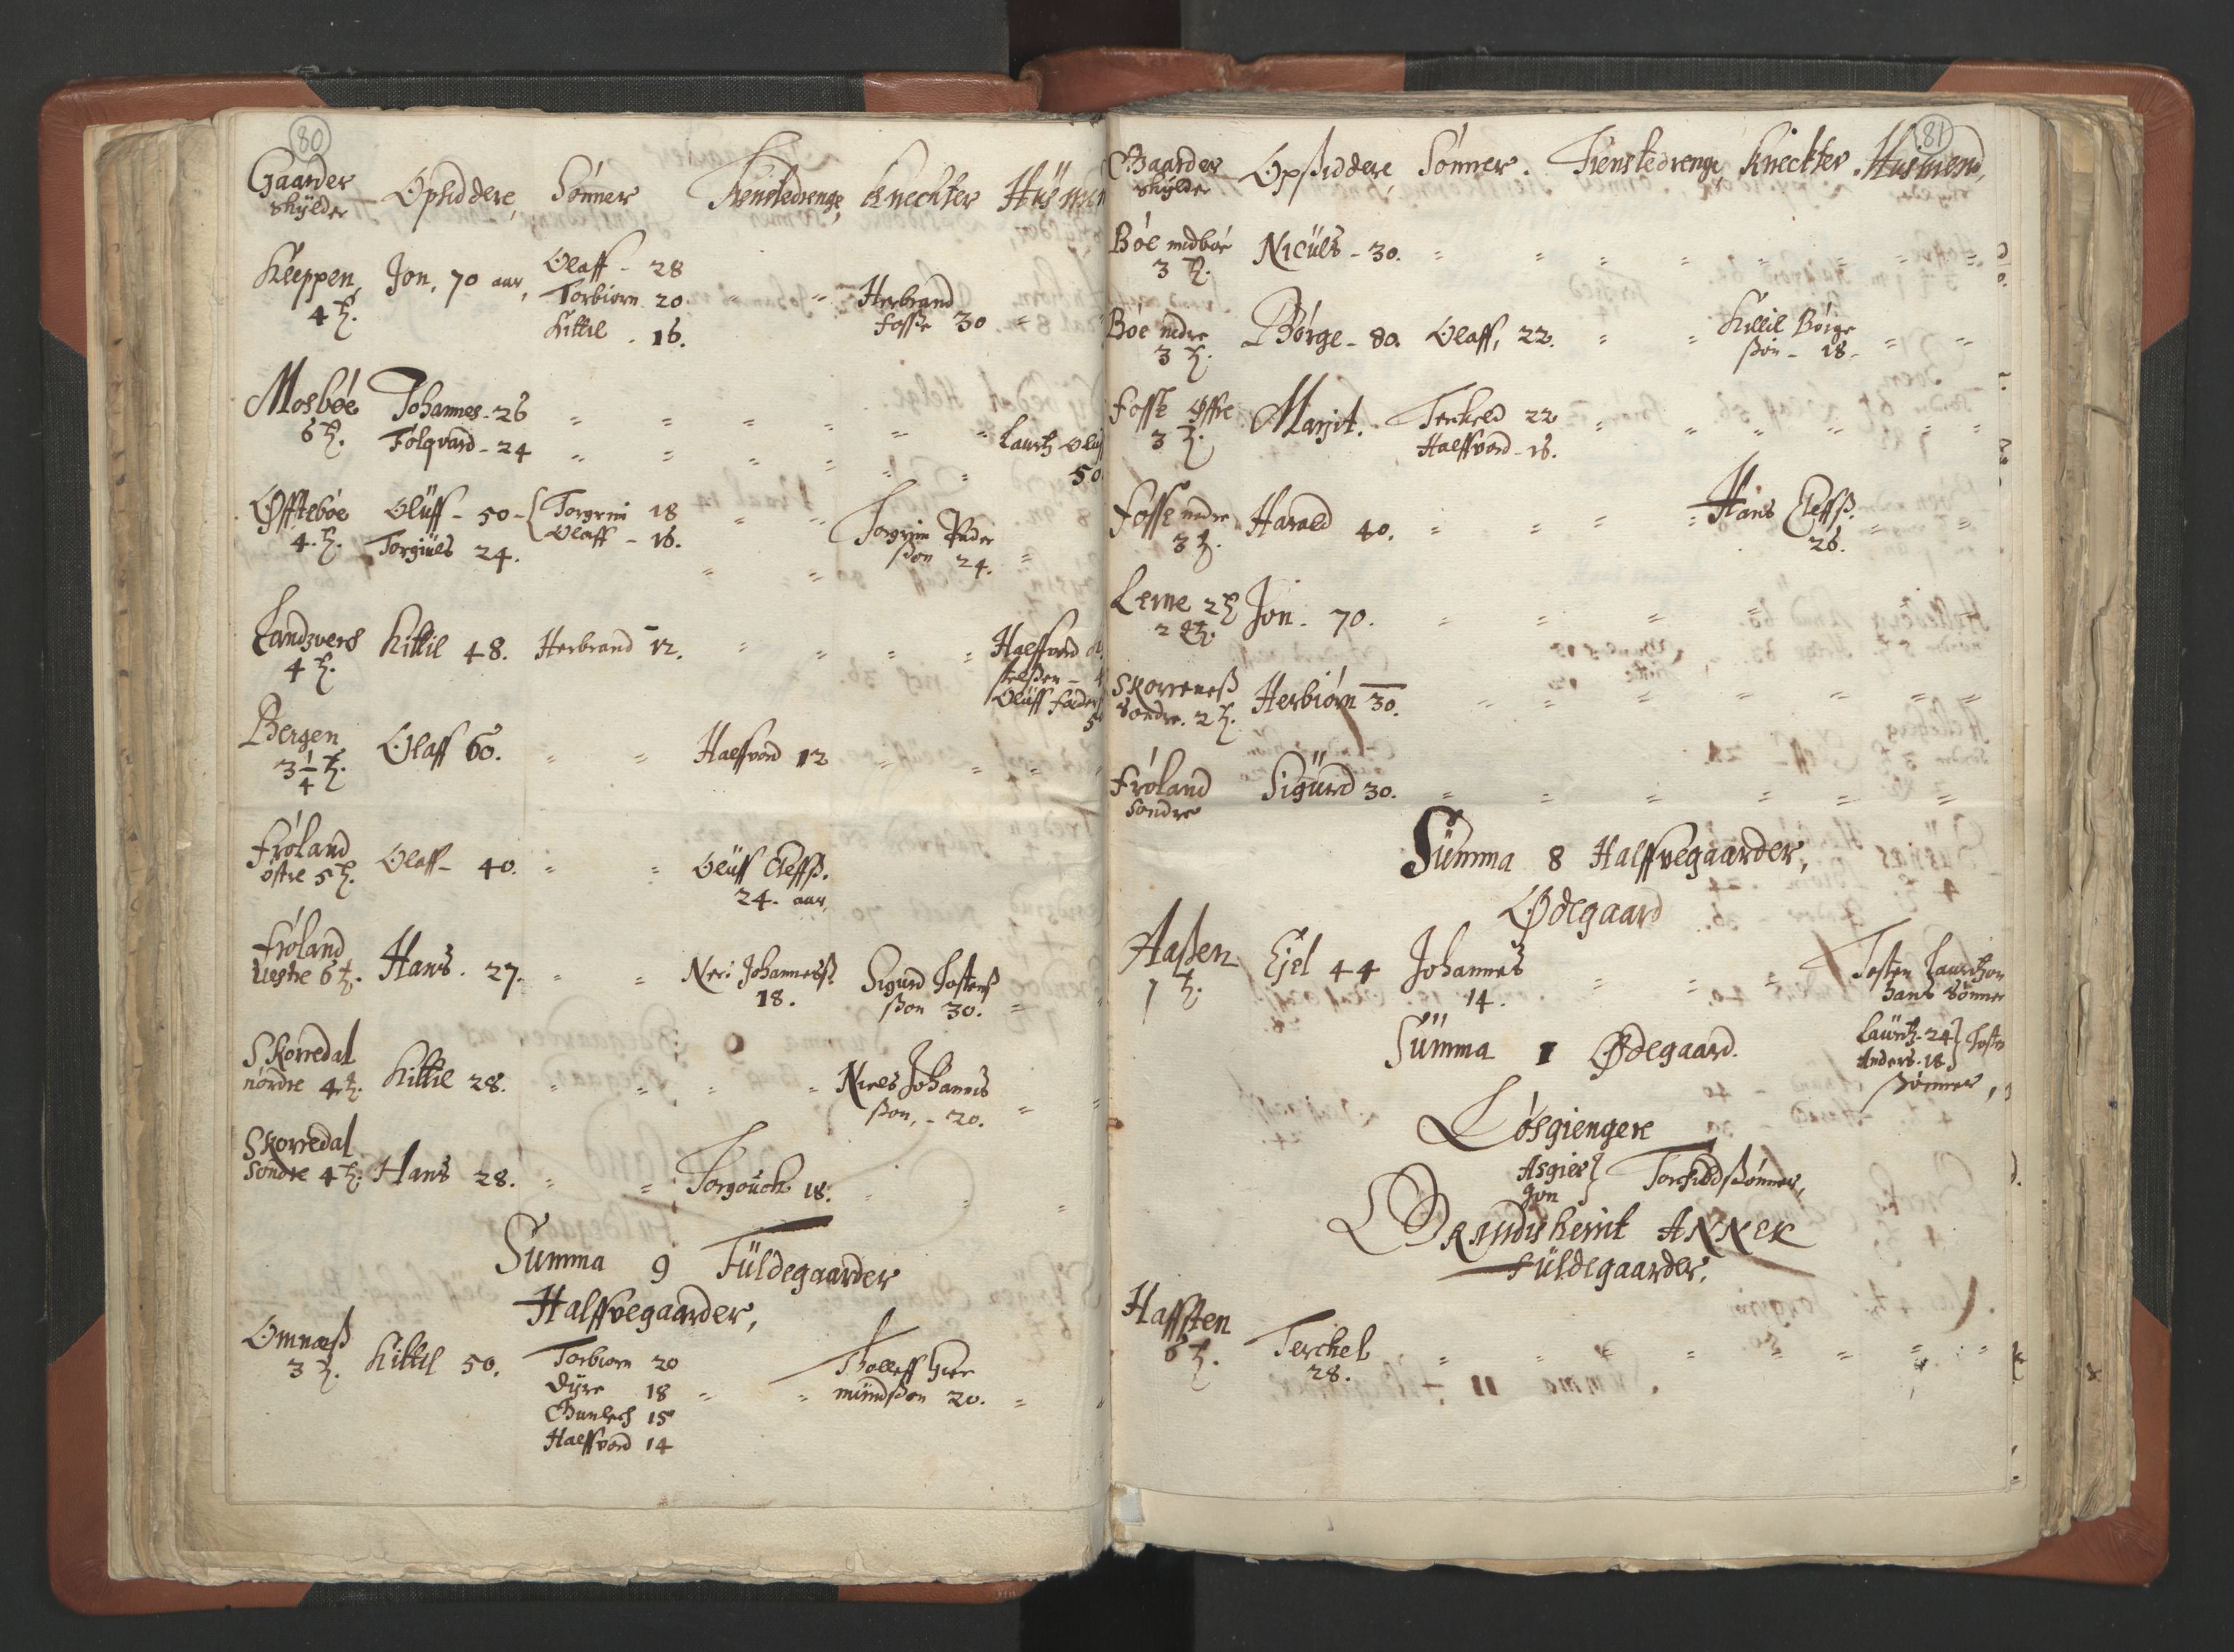 RA, Vicar's Census 1664-1666, no. 12: Øvre Telemark deanery, Nedre Telemark deanery and Bamble deanery, 1664-1666, p. 80-81